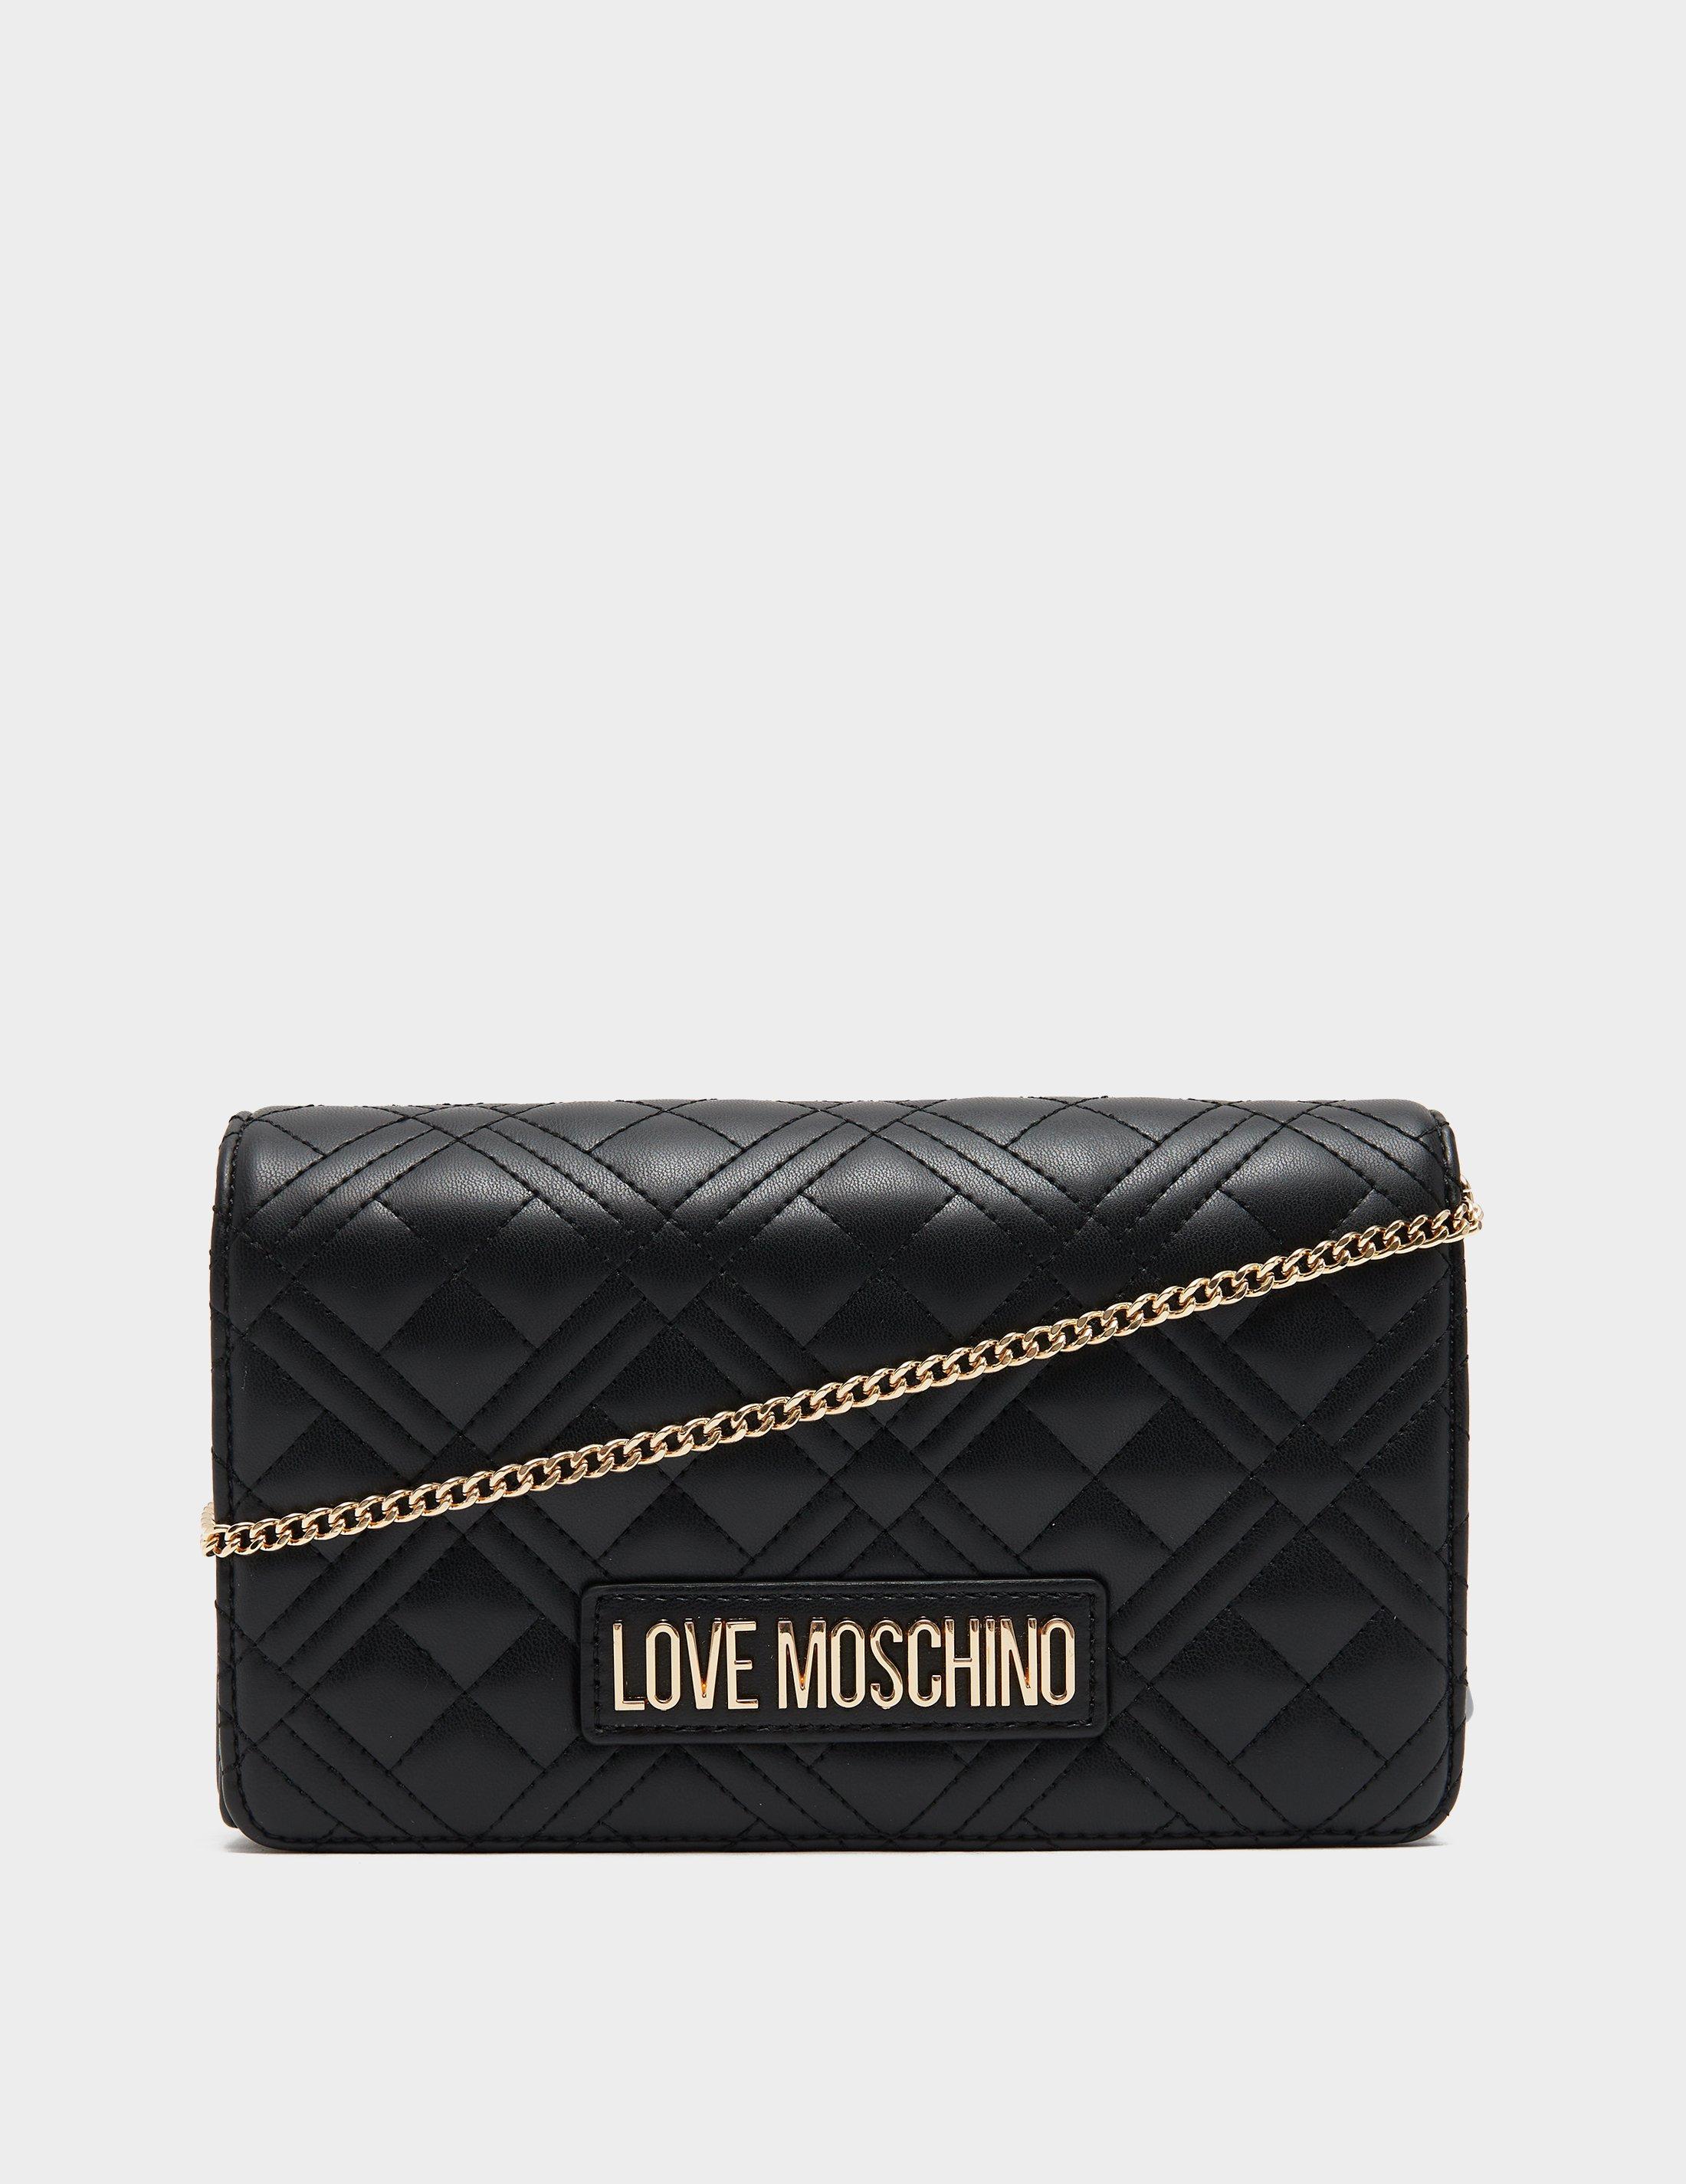 love moschino purses